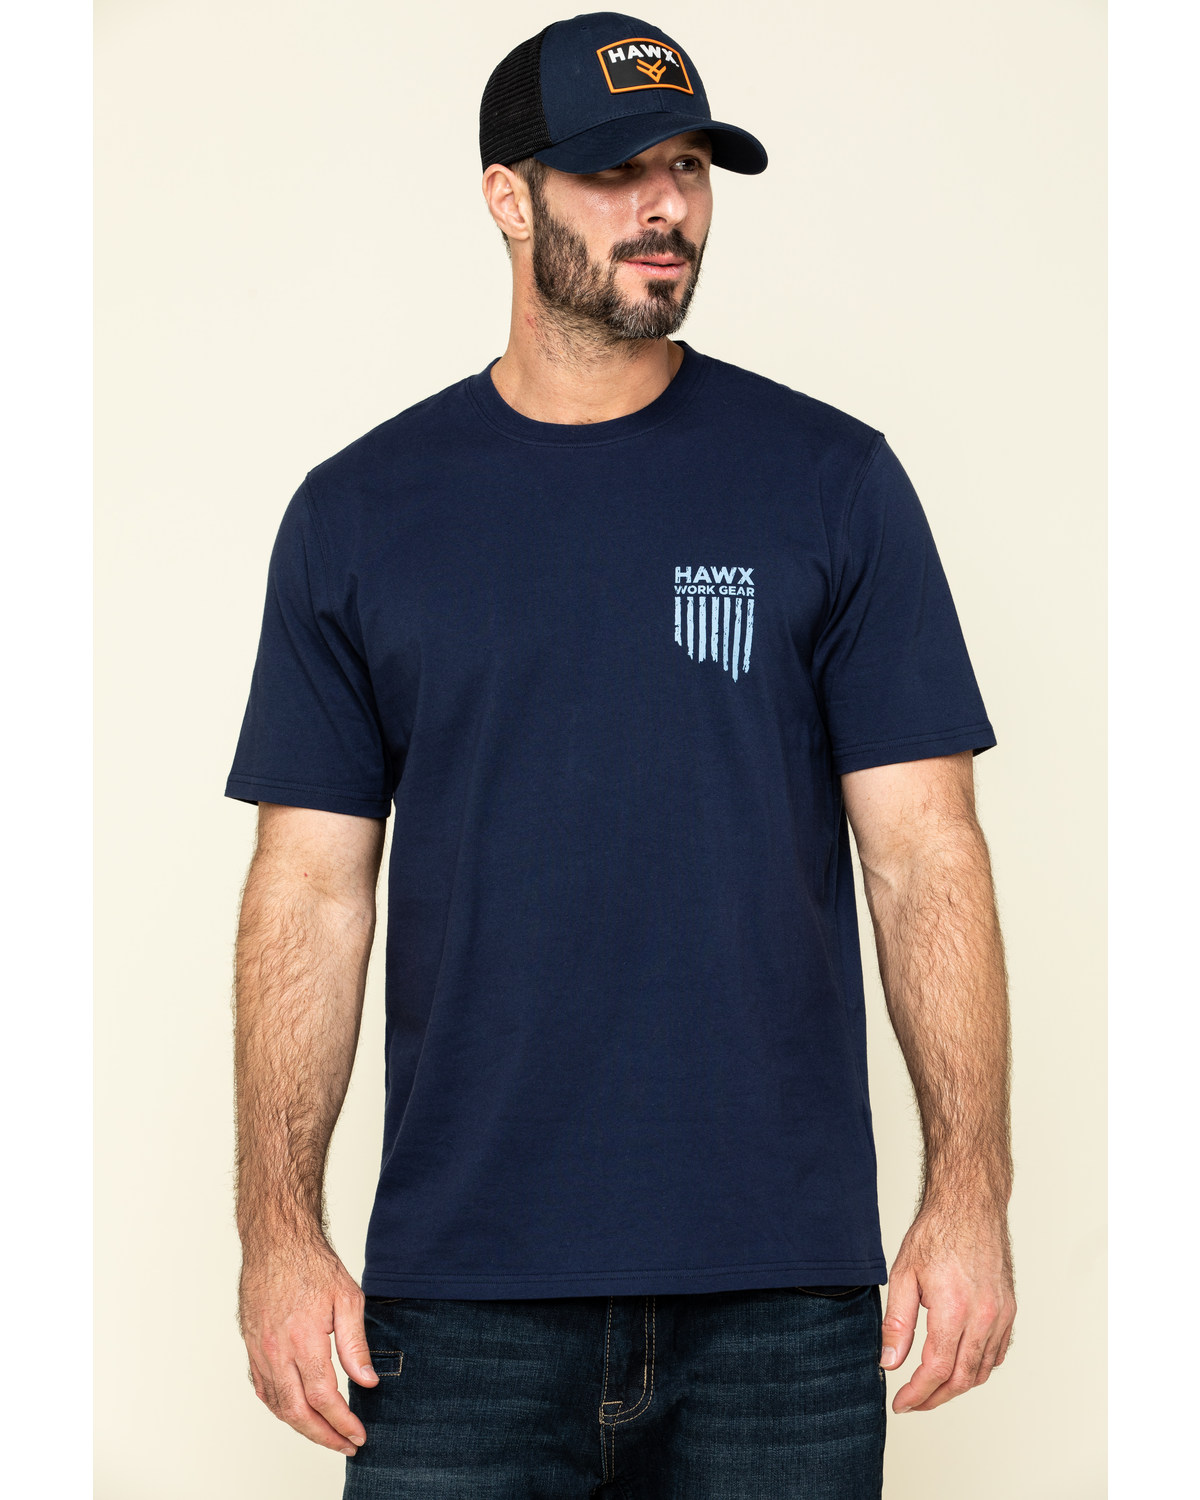 Hawx Men's Navy Vertical Flag Logo Graphic Work T-Shirt